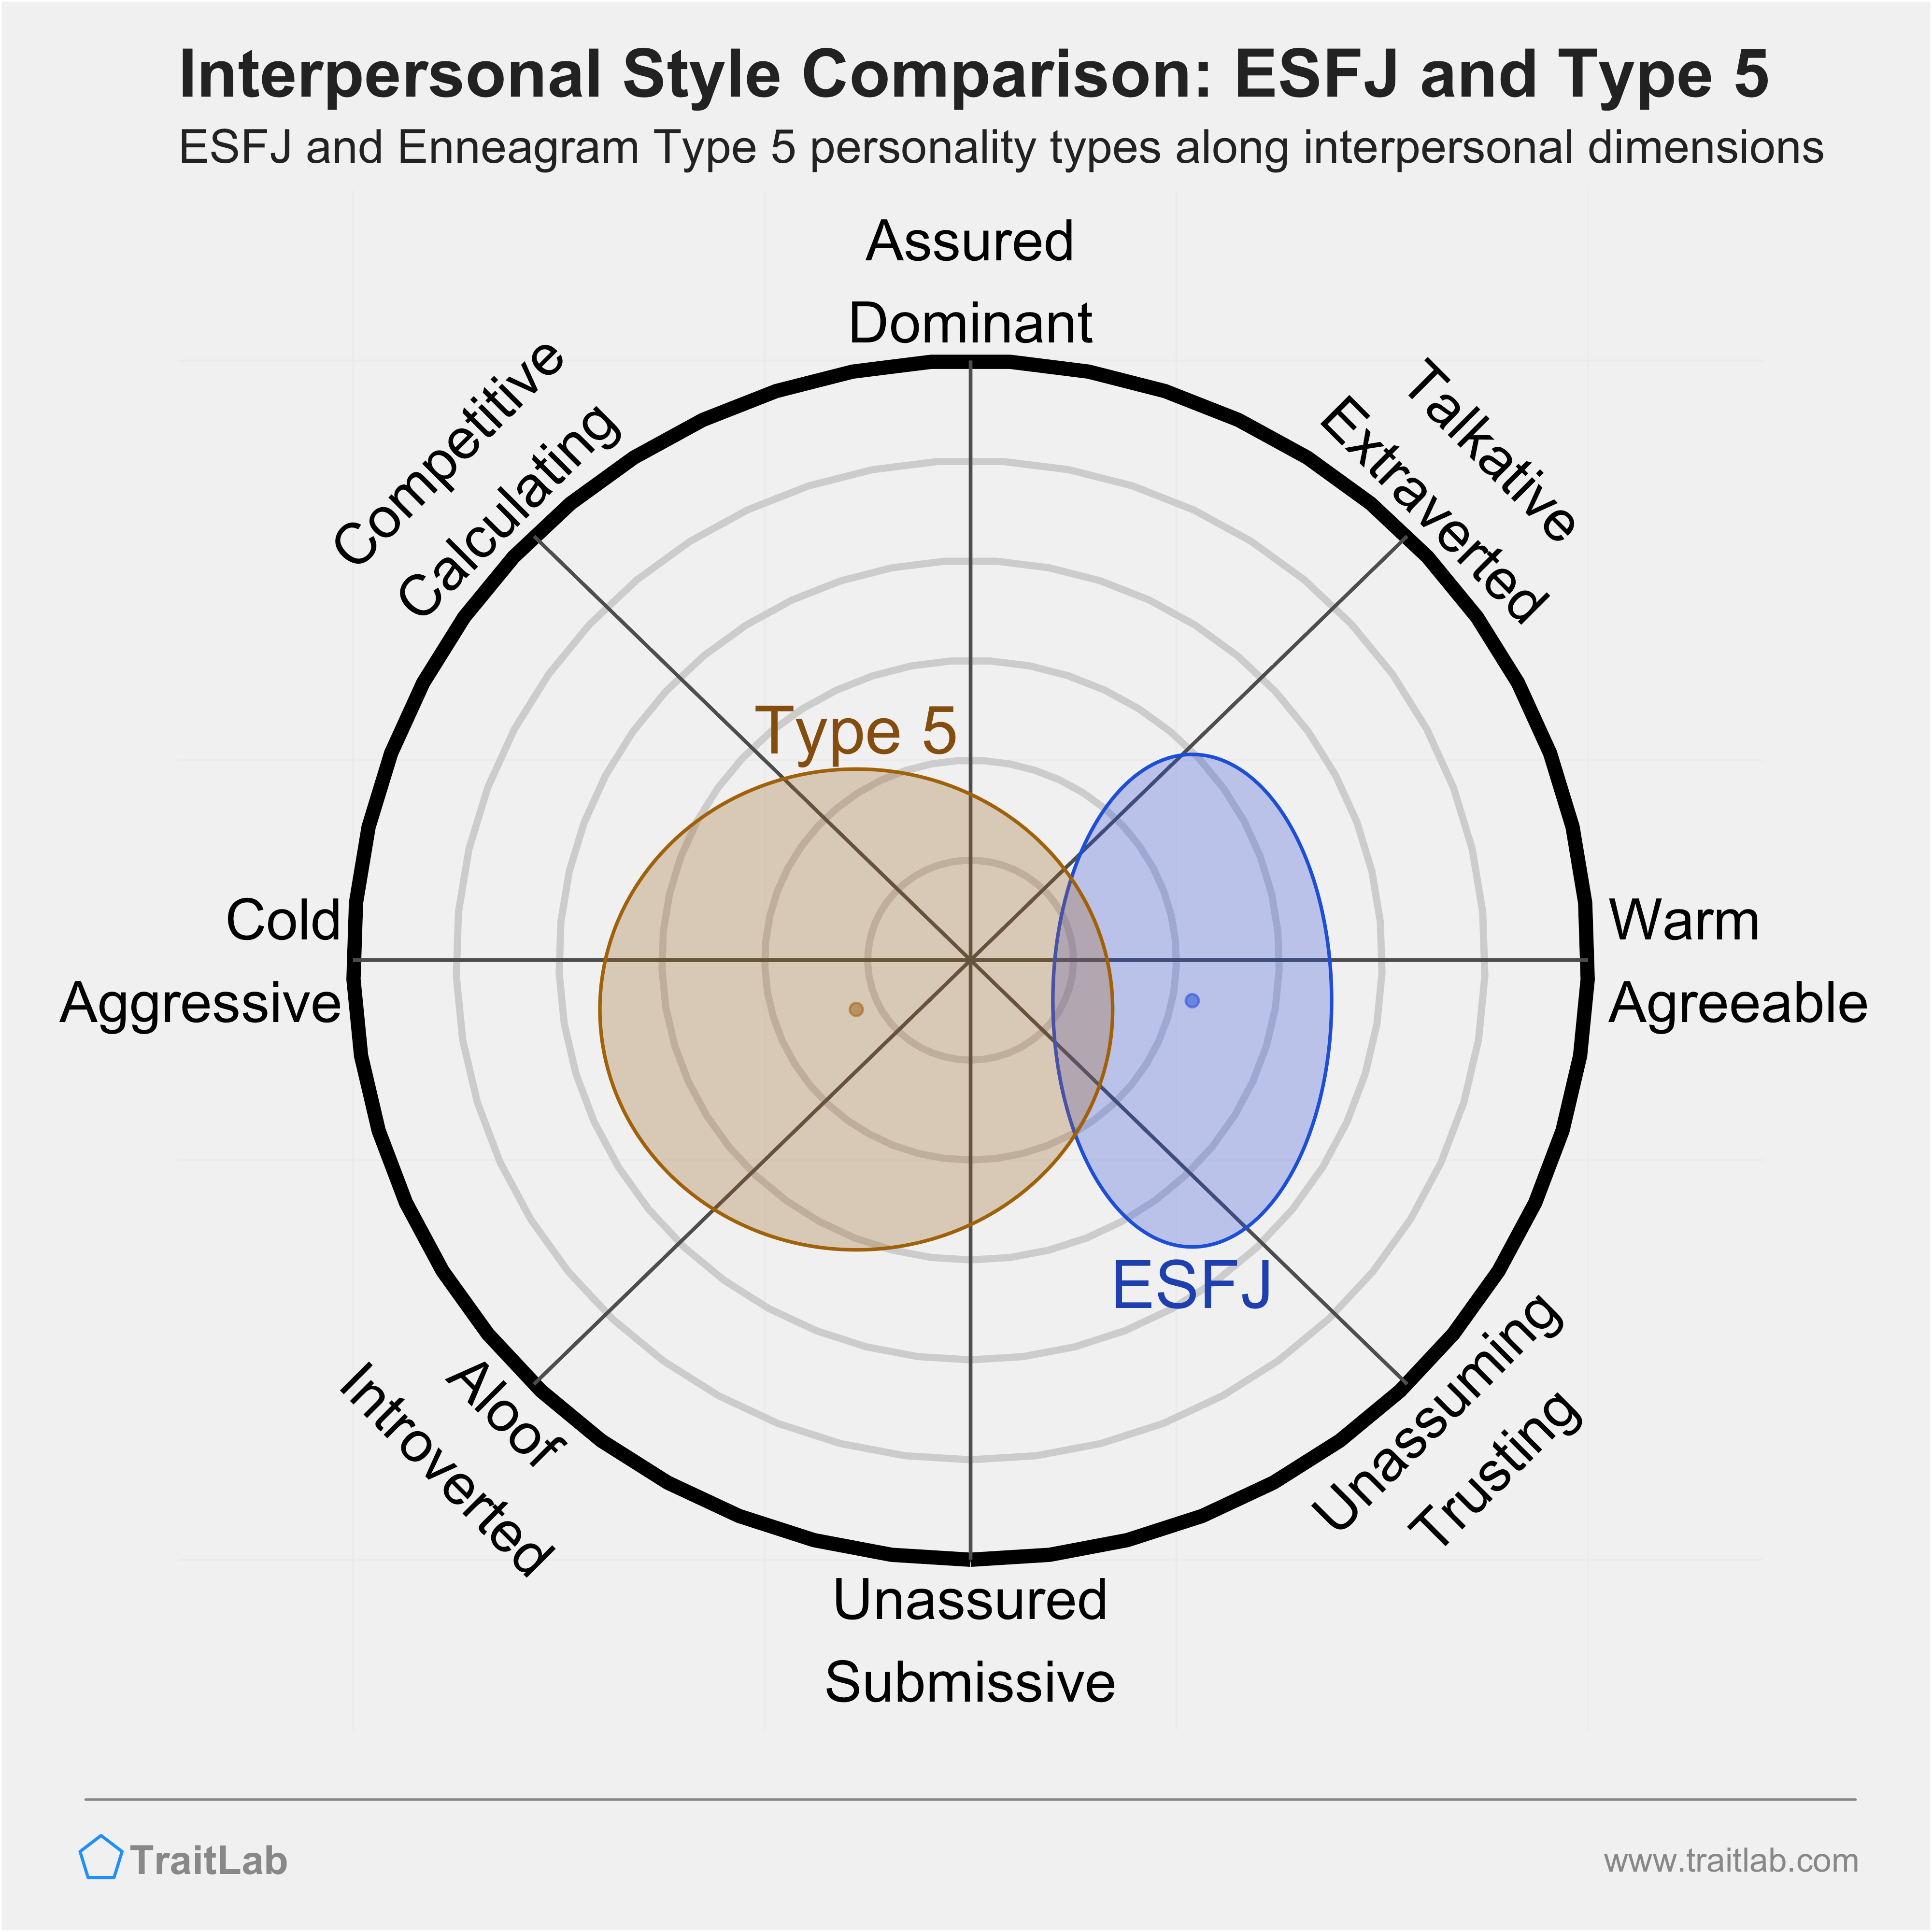 Enneagram ESFJ and Type 5 comparison across interpersonal dimensions